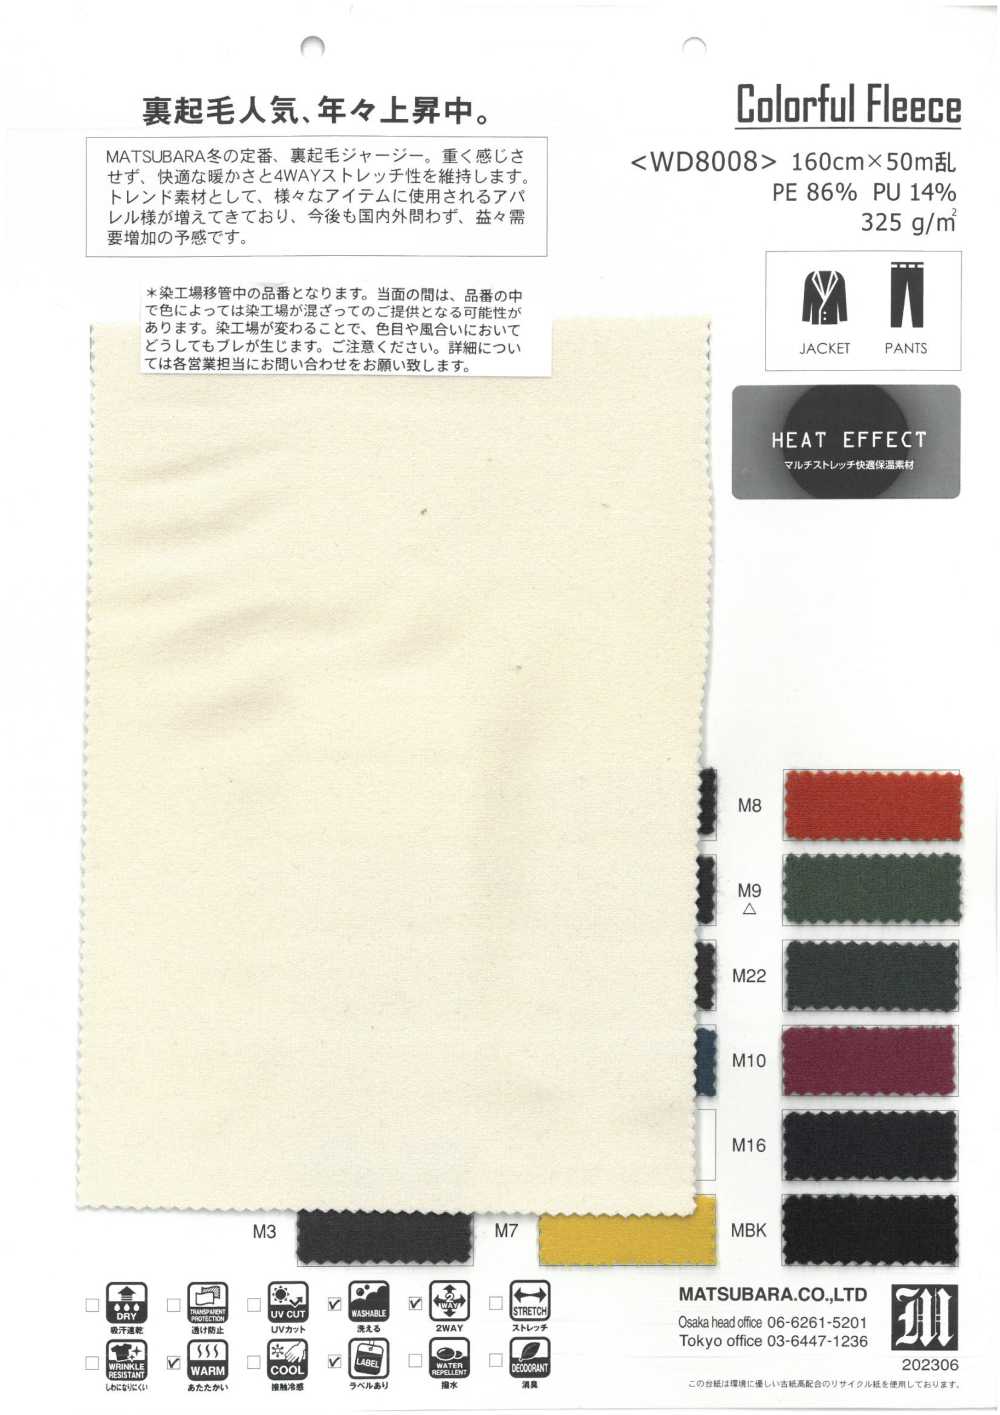 WD8008 Colorful Fleece[Textile / Fabric] Matsubara